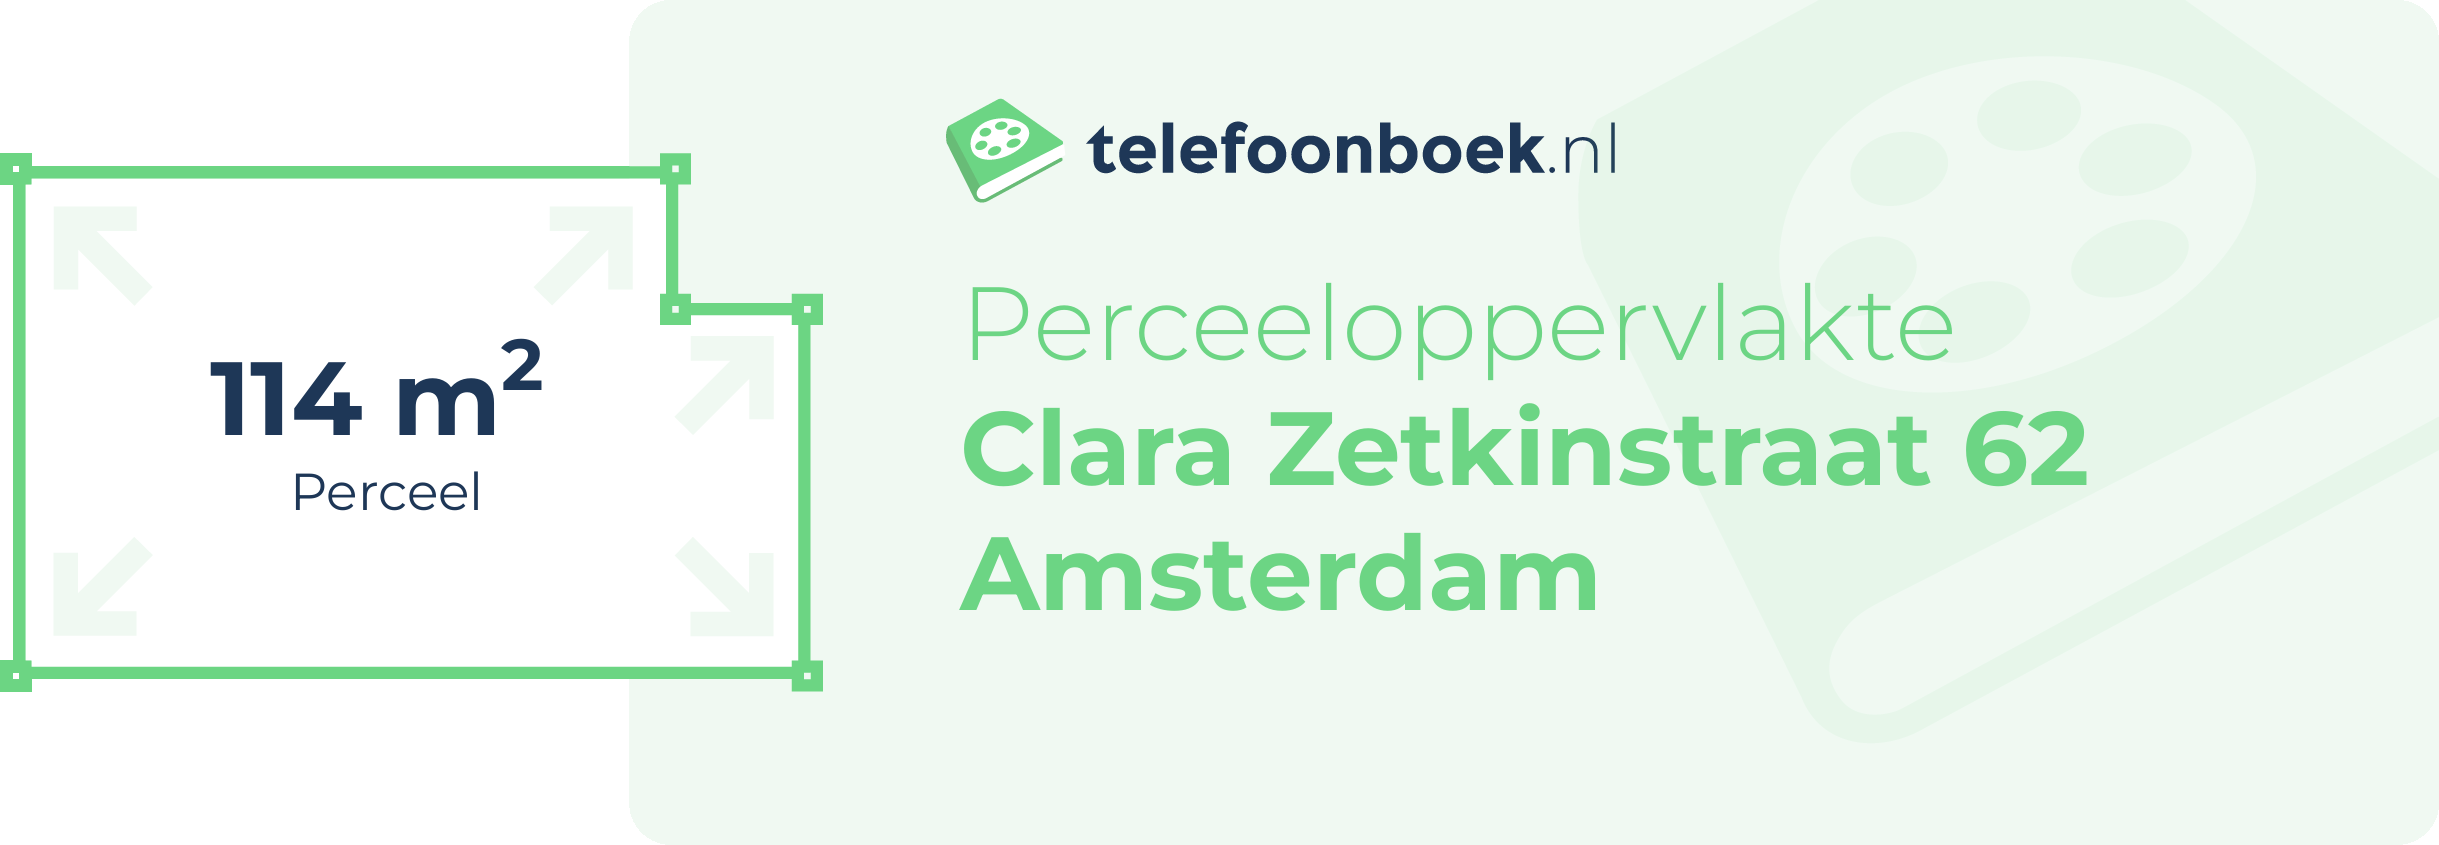 Perceeloppervlakte Clara Zetkinstraat 62 Amsterdam